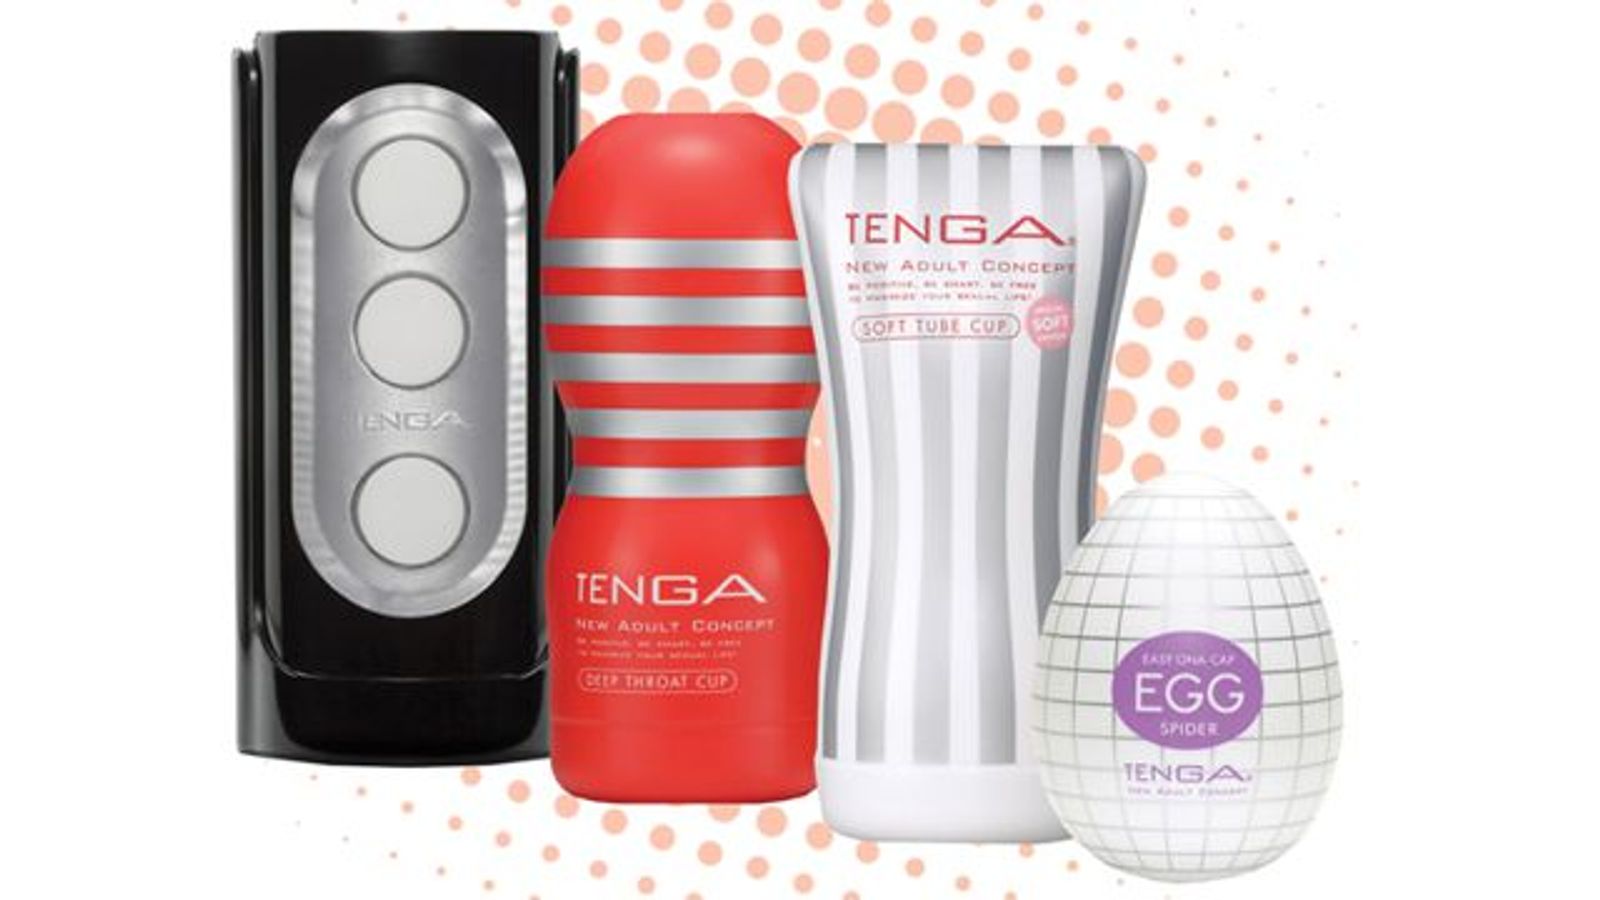 Nalpac Ltd. Distributes Tenga Products for Men